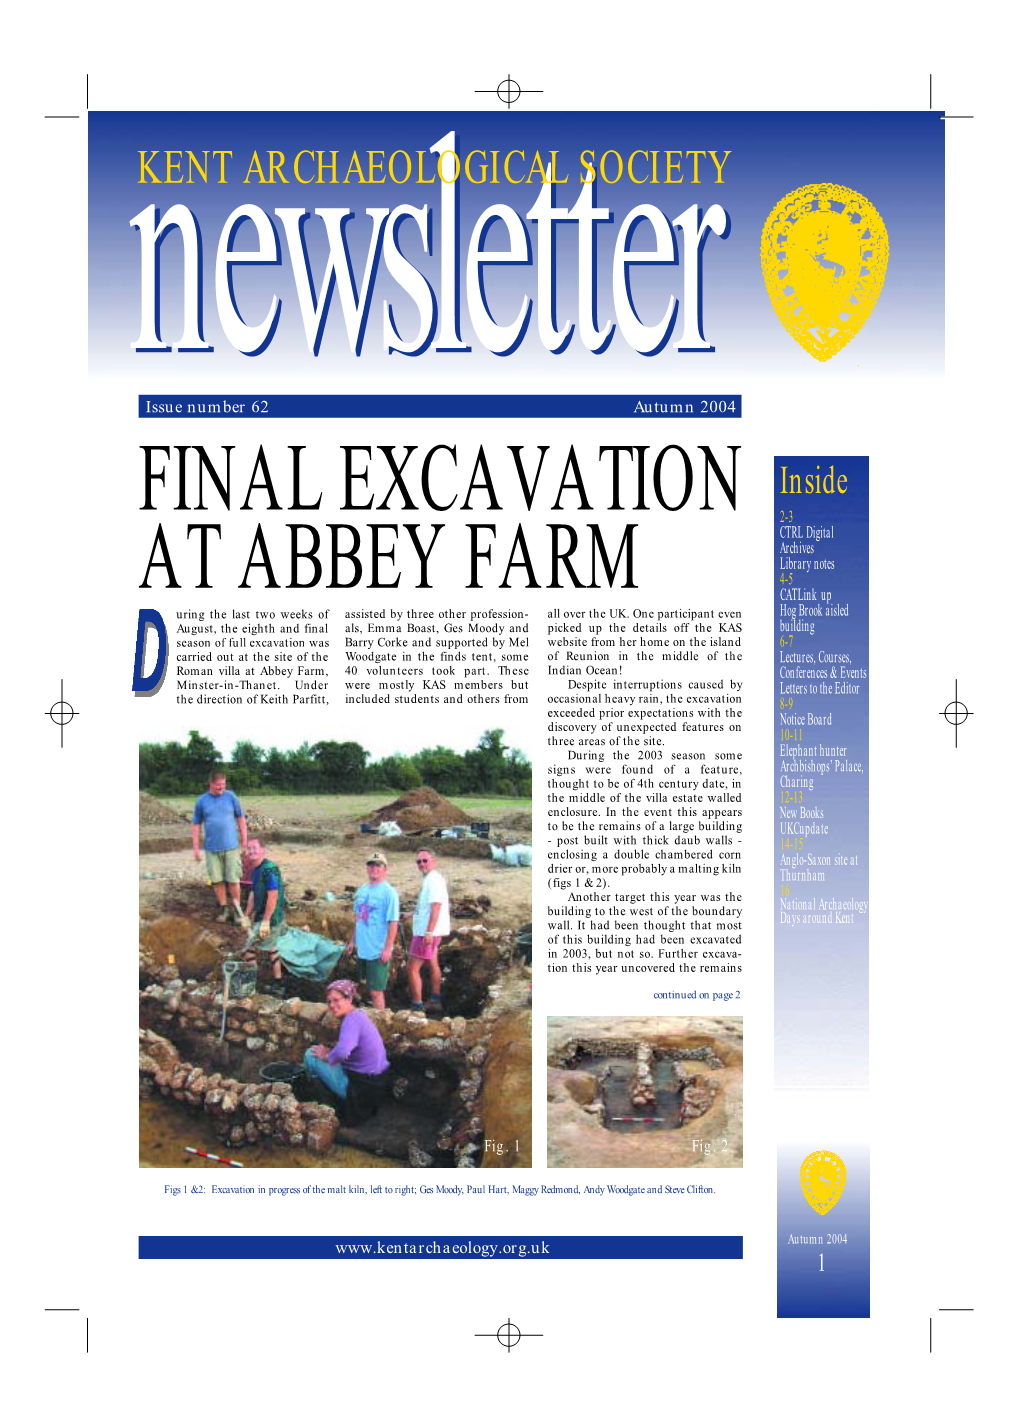 Final Excavation at Abbey Farm